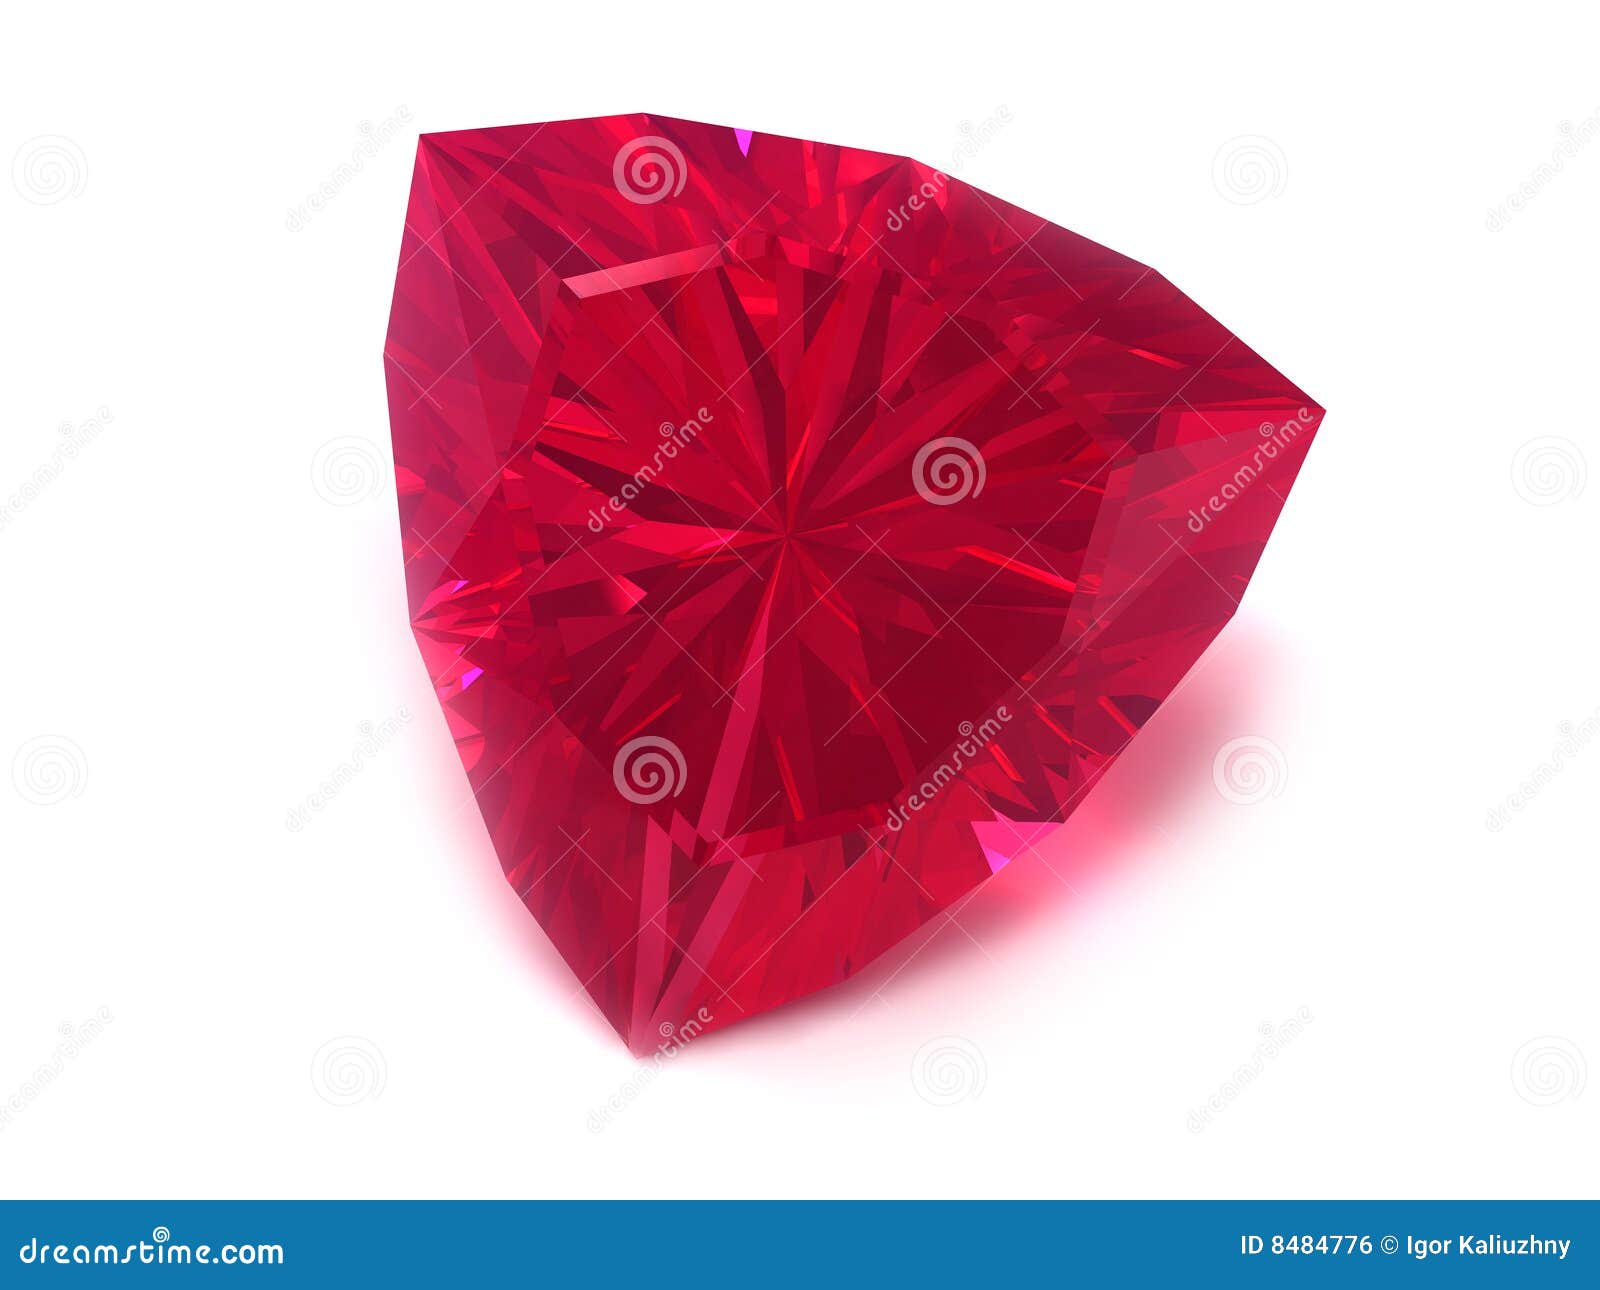 rhodolite or ruby gemstone